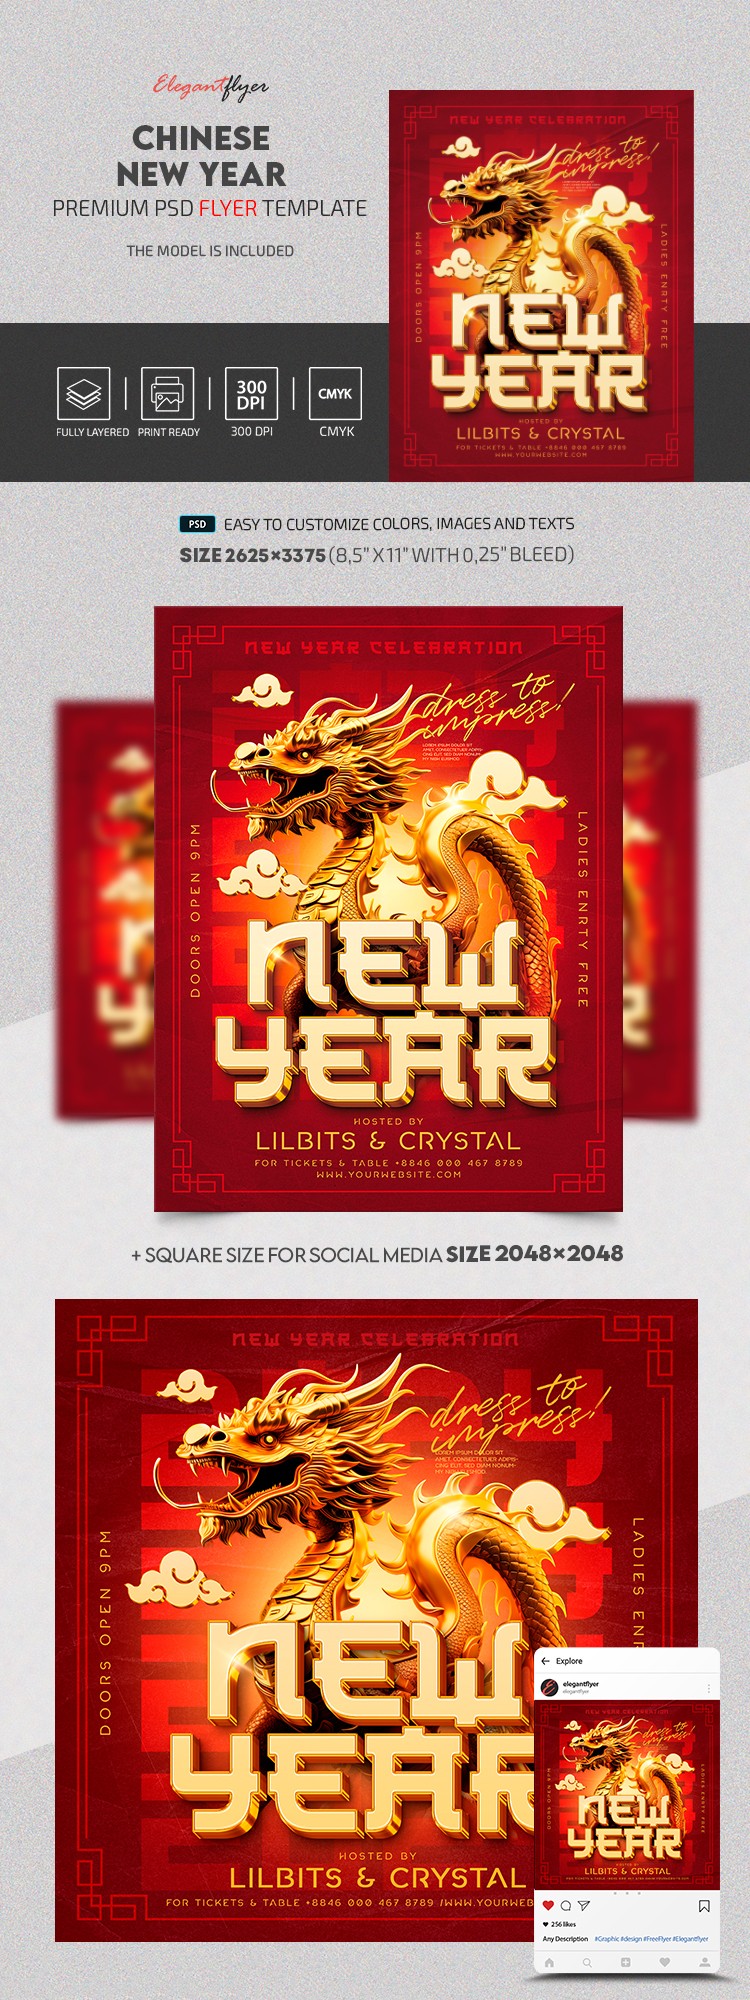 Le Nouvel An chinois by ElegantFlyer